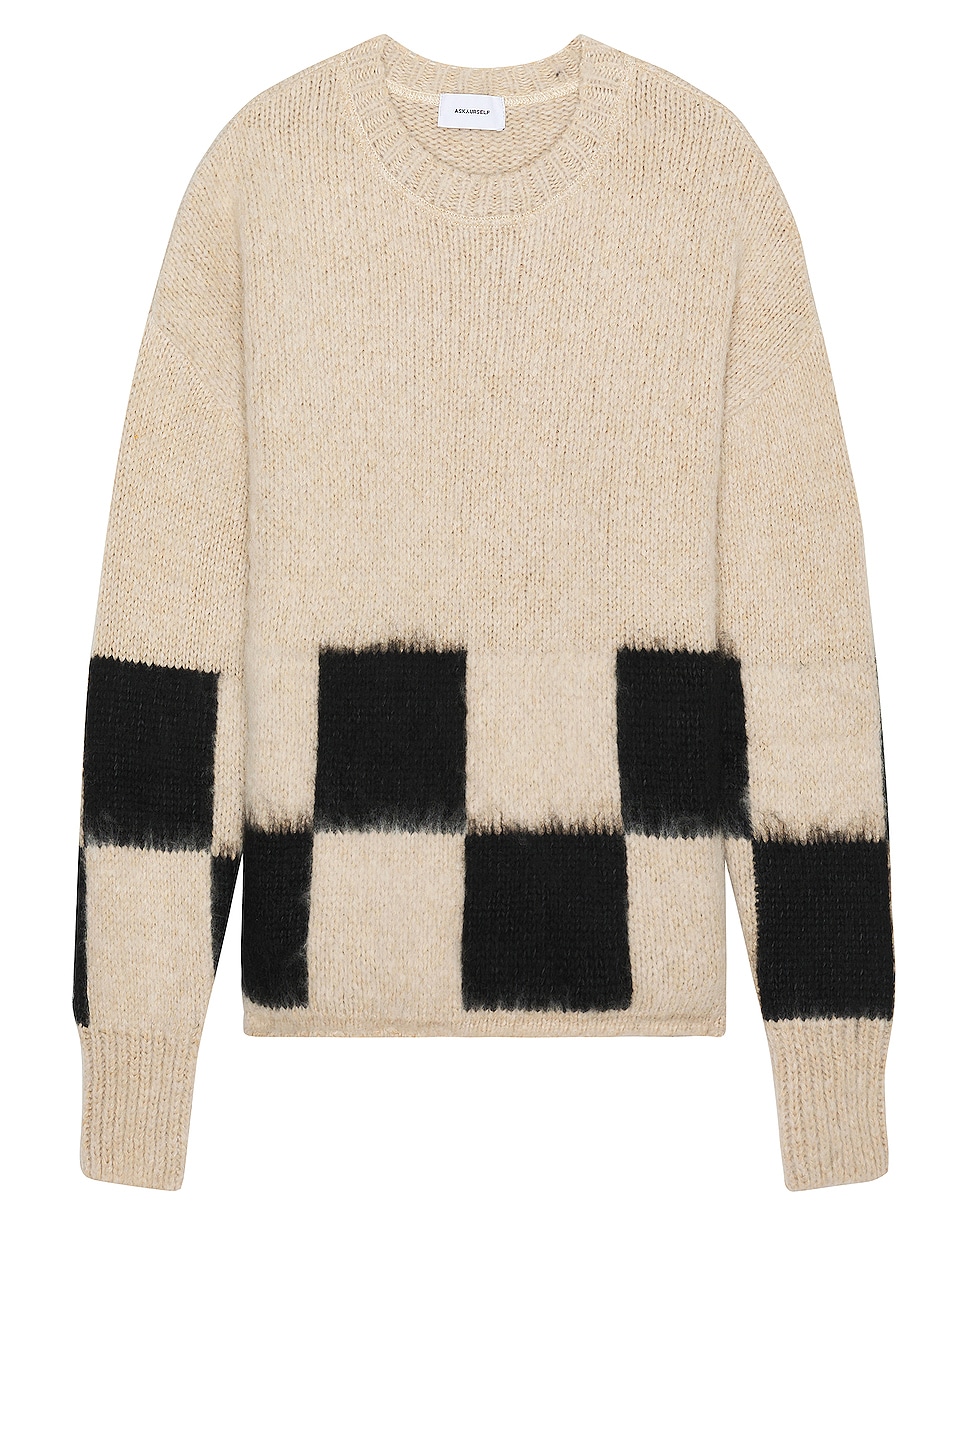 Askyurself Brushed Checkered Knit Sweater in Ecru & Black